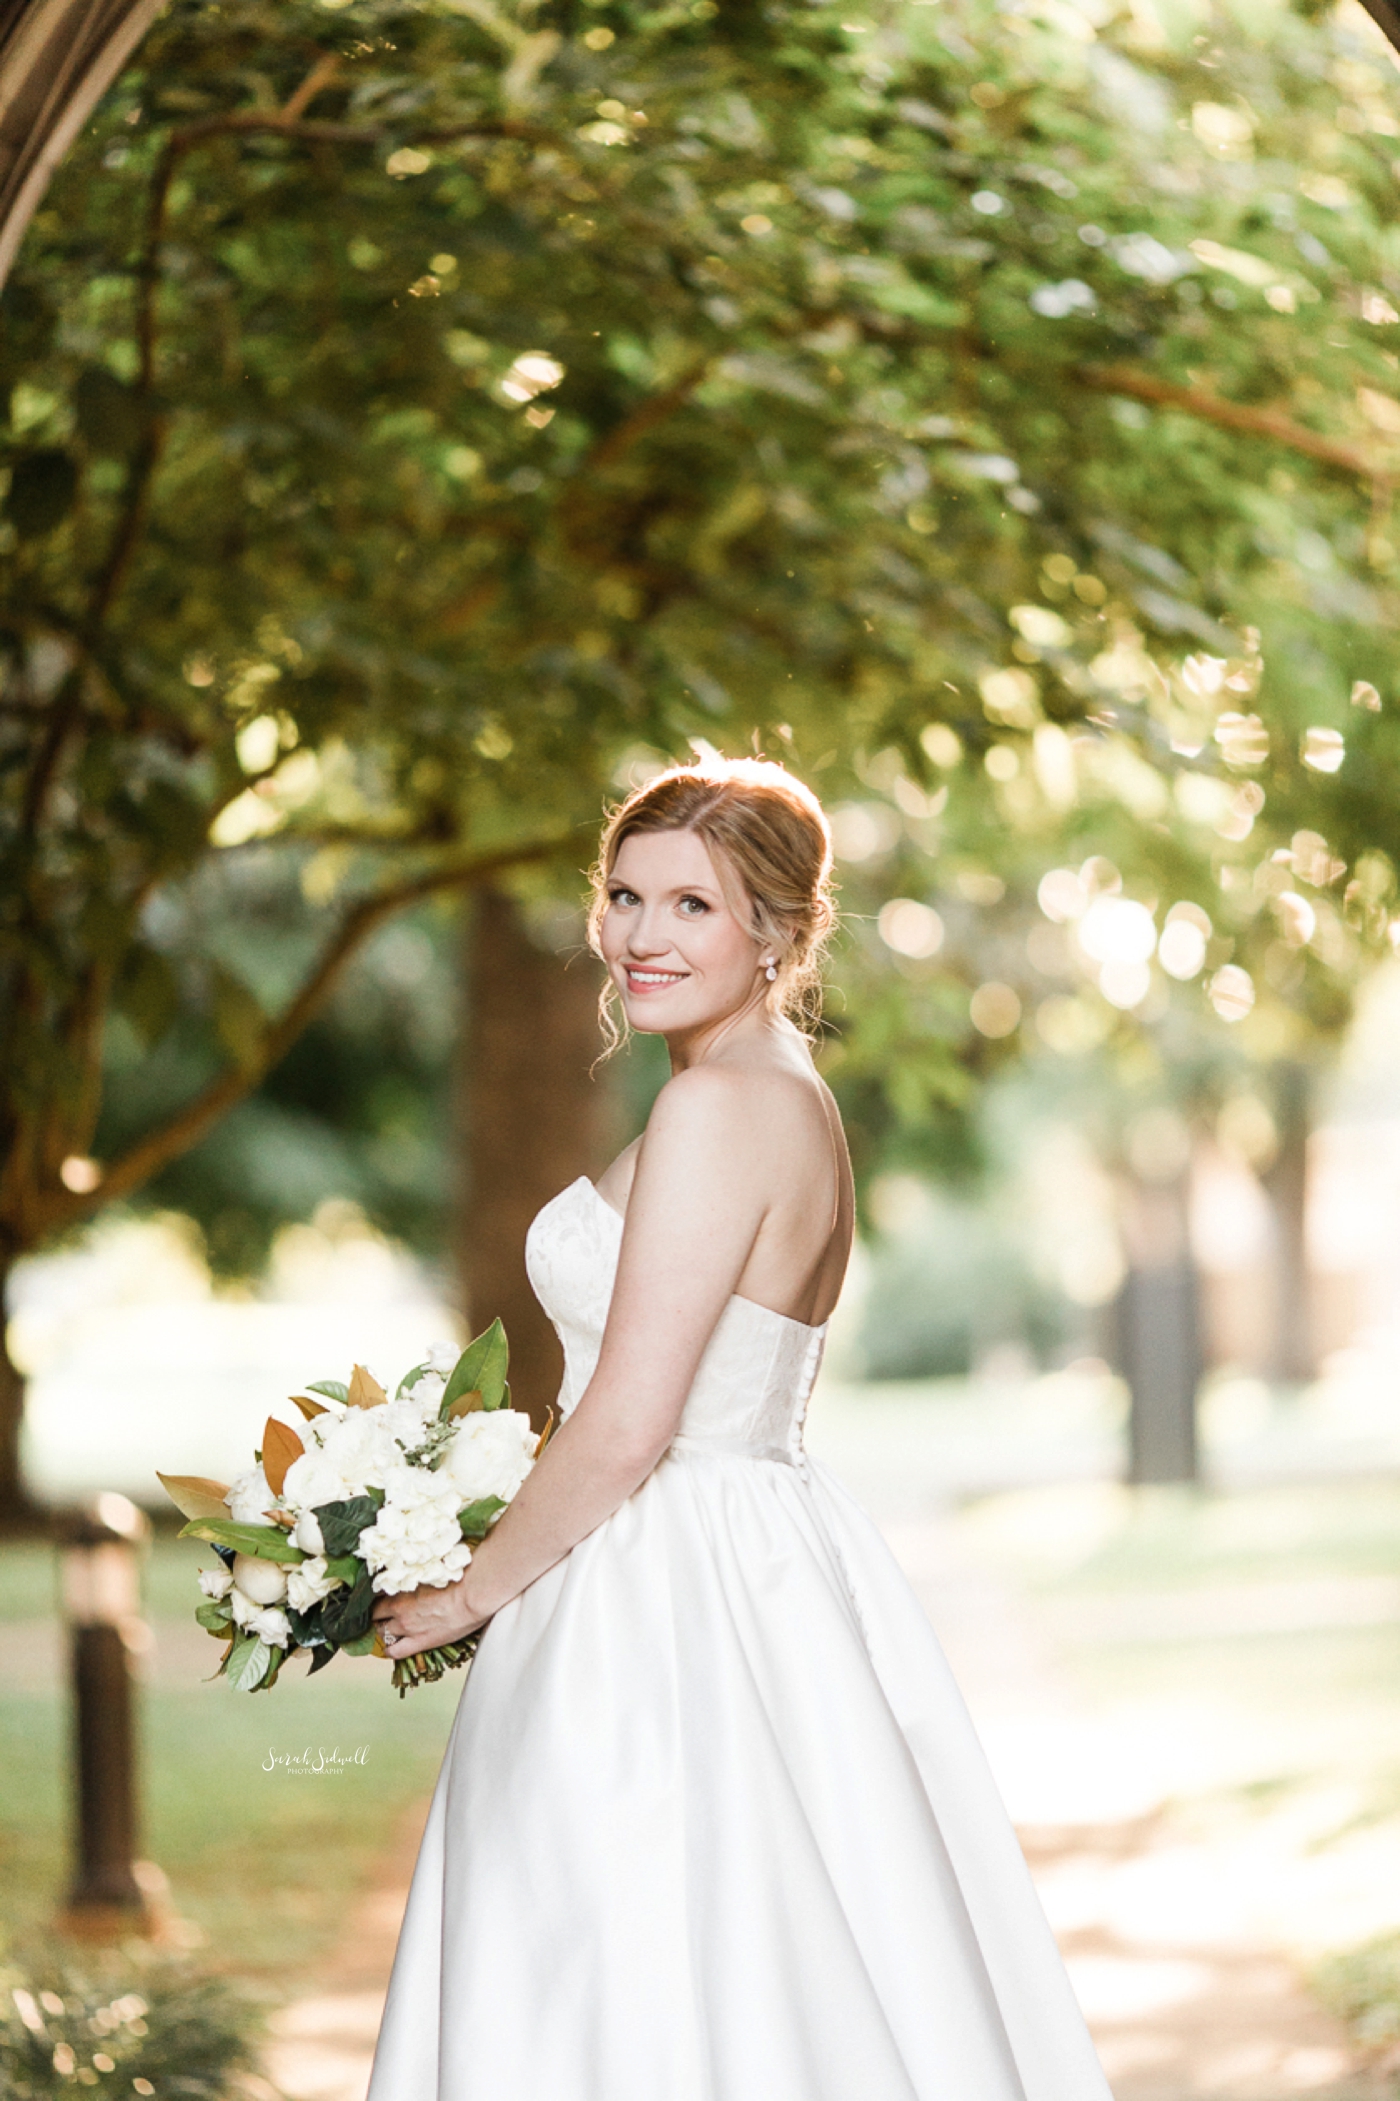 Bridal Photographs In Nashville | Sarah Sidwell Photography